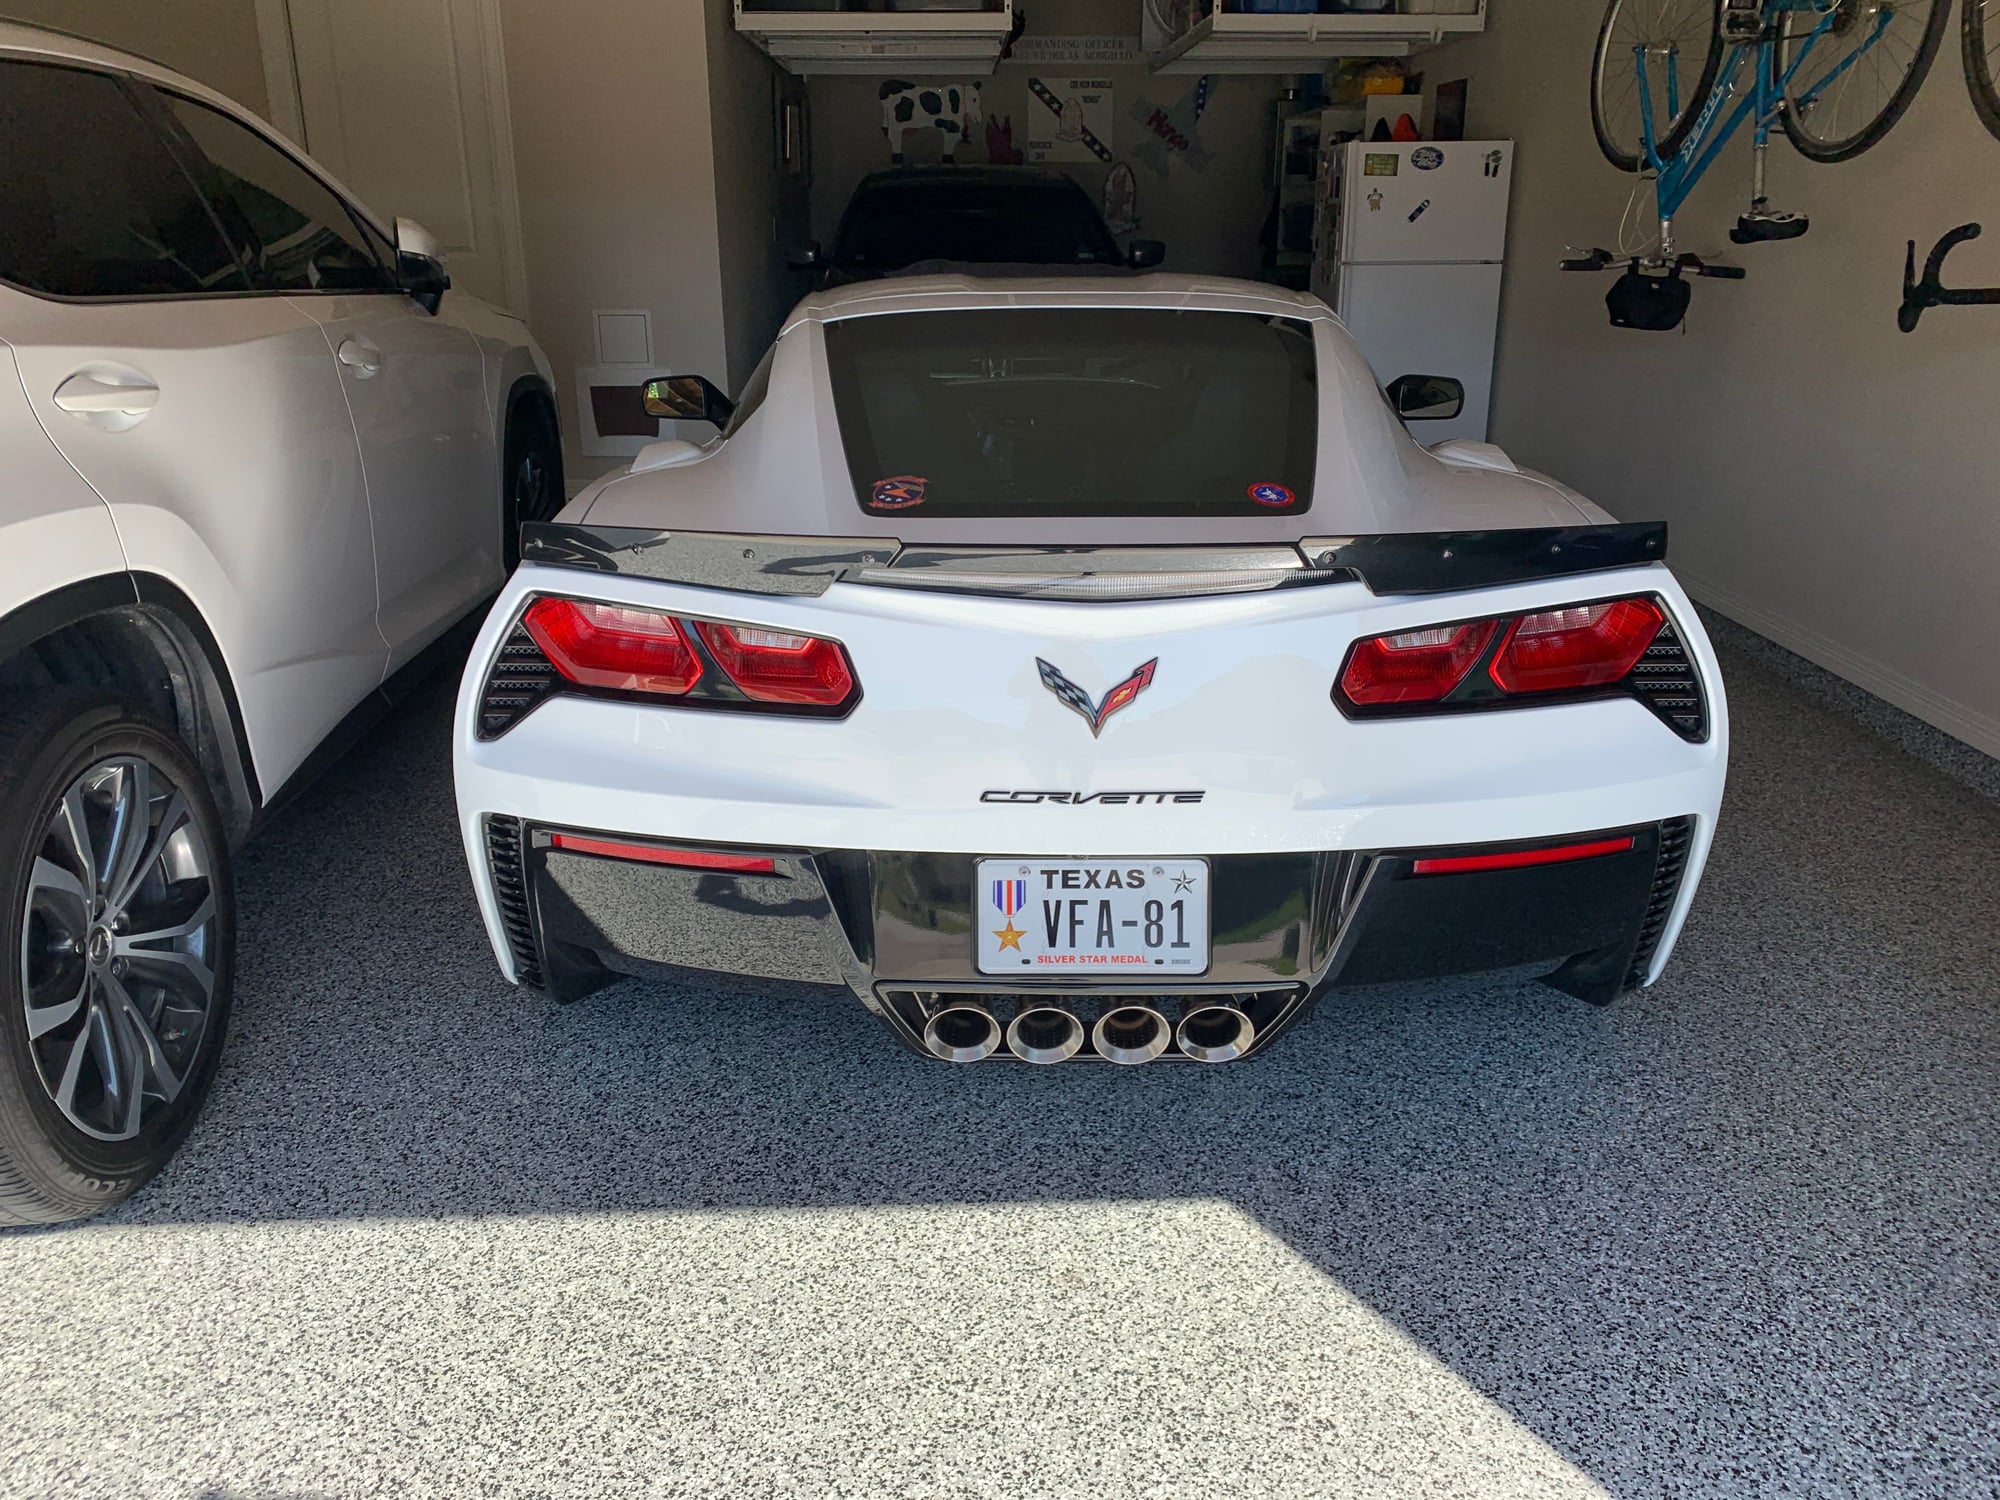 Chevrolet Corvette * muy garaje transpirable innnenbereich garaje cochera